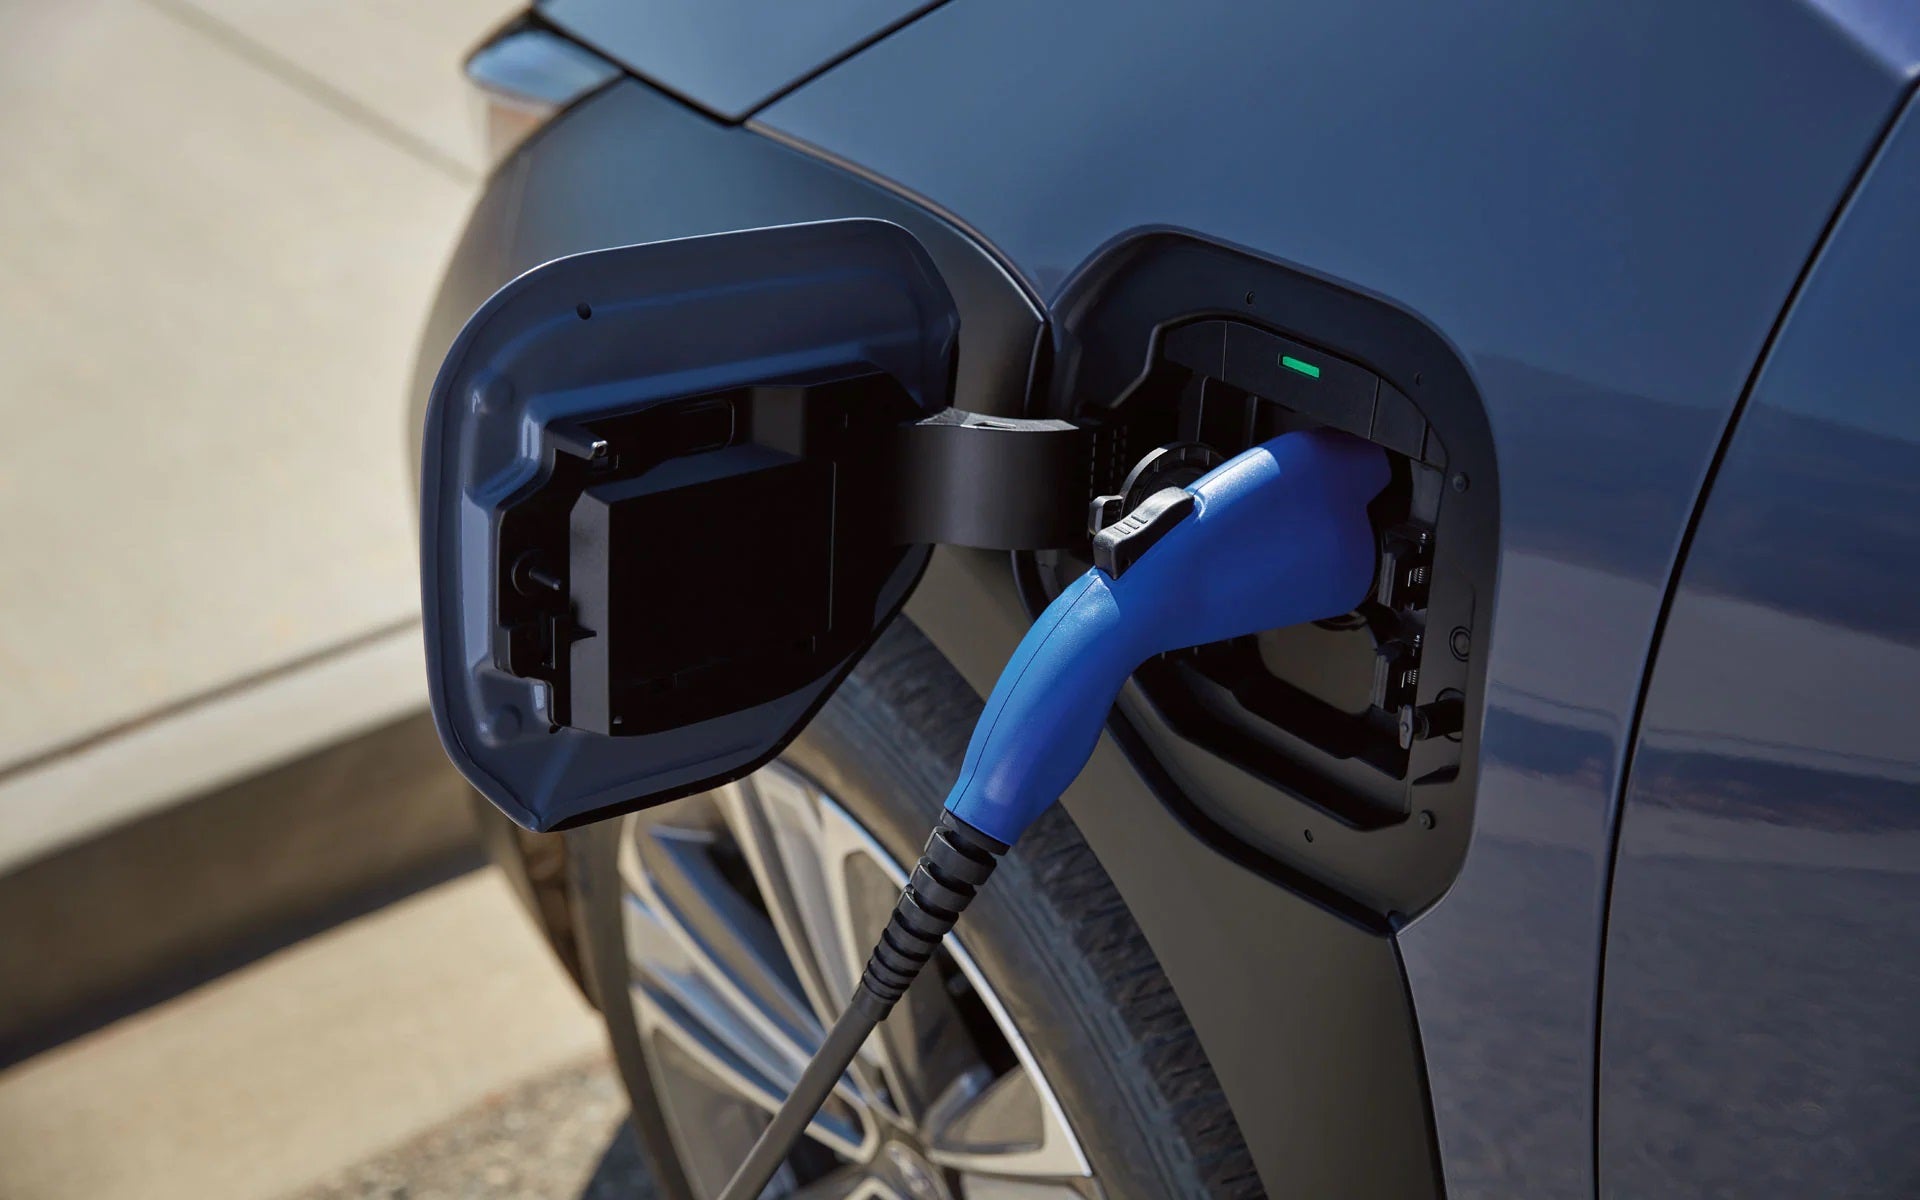 Guide to electric vehicles | Subaru of Ann Arbor in Ann Arbor MI